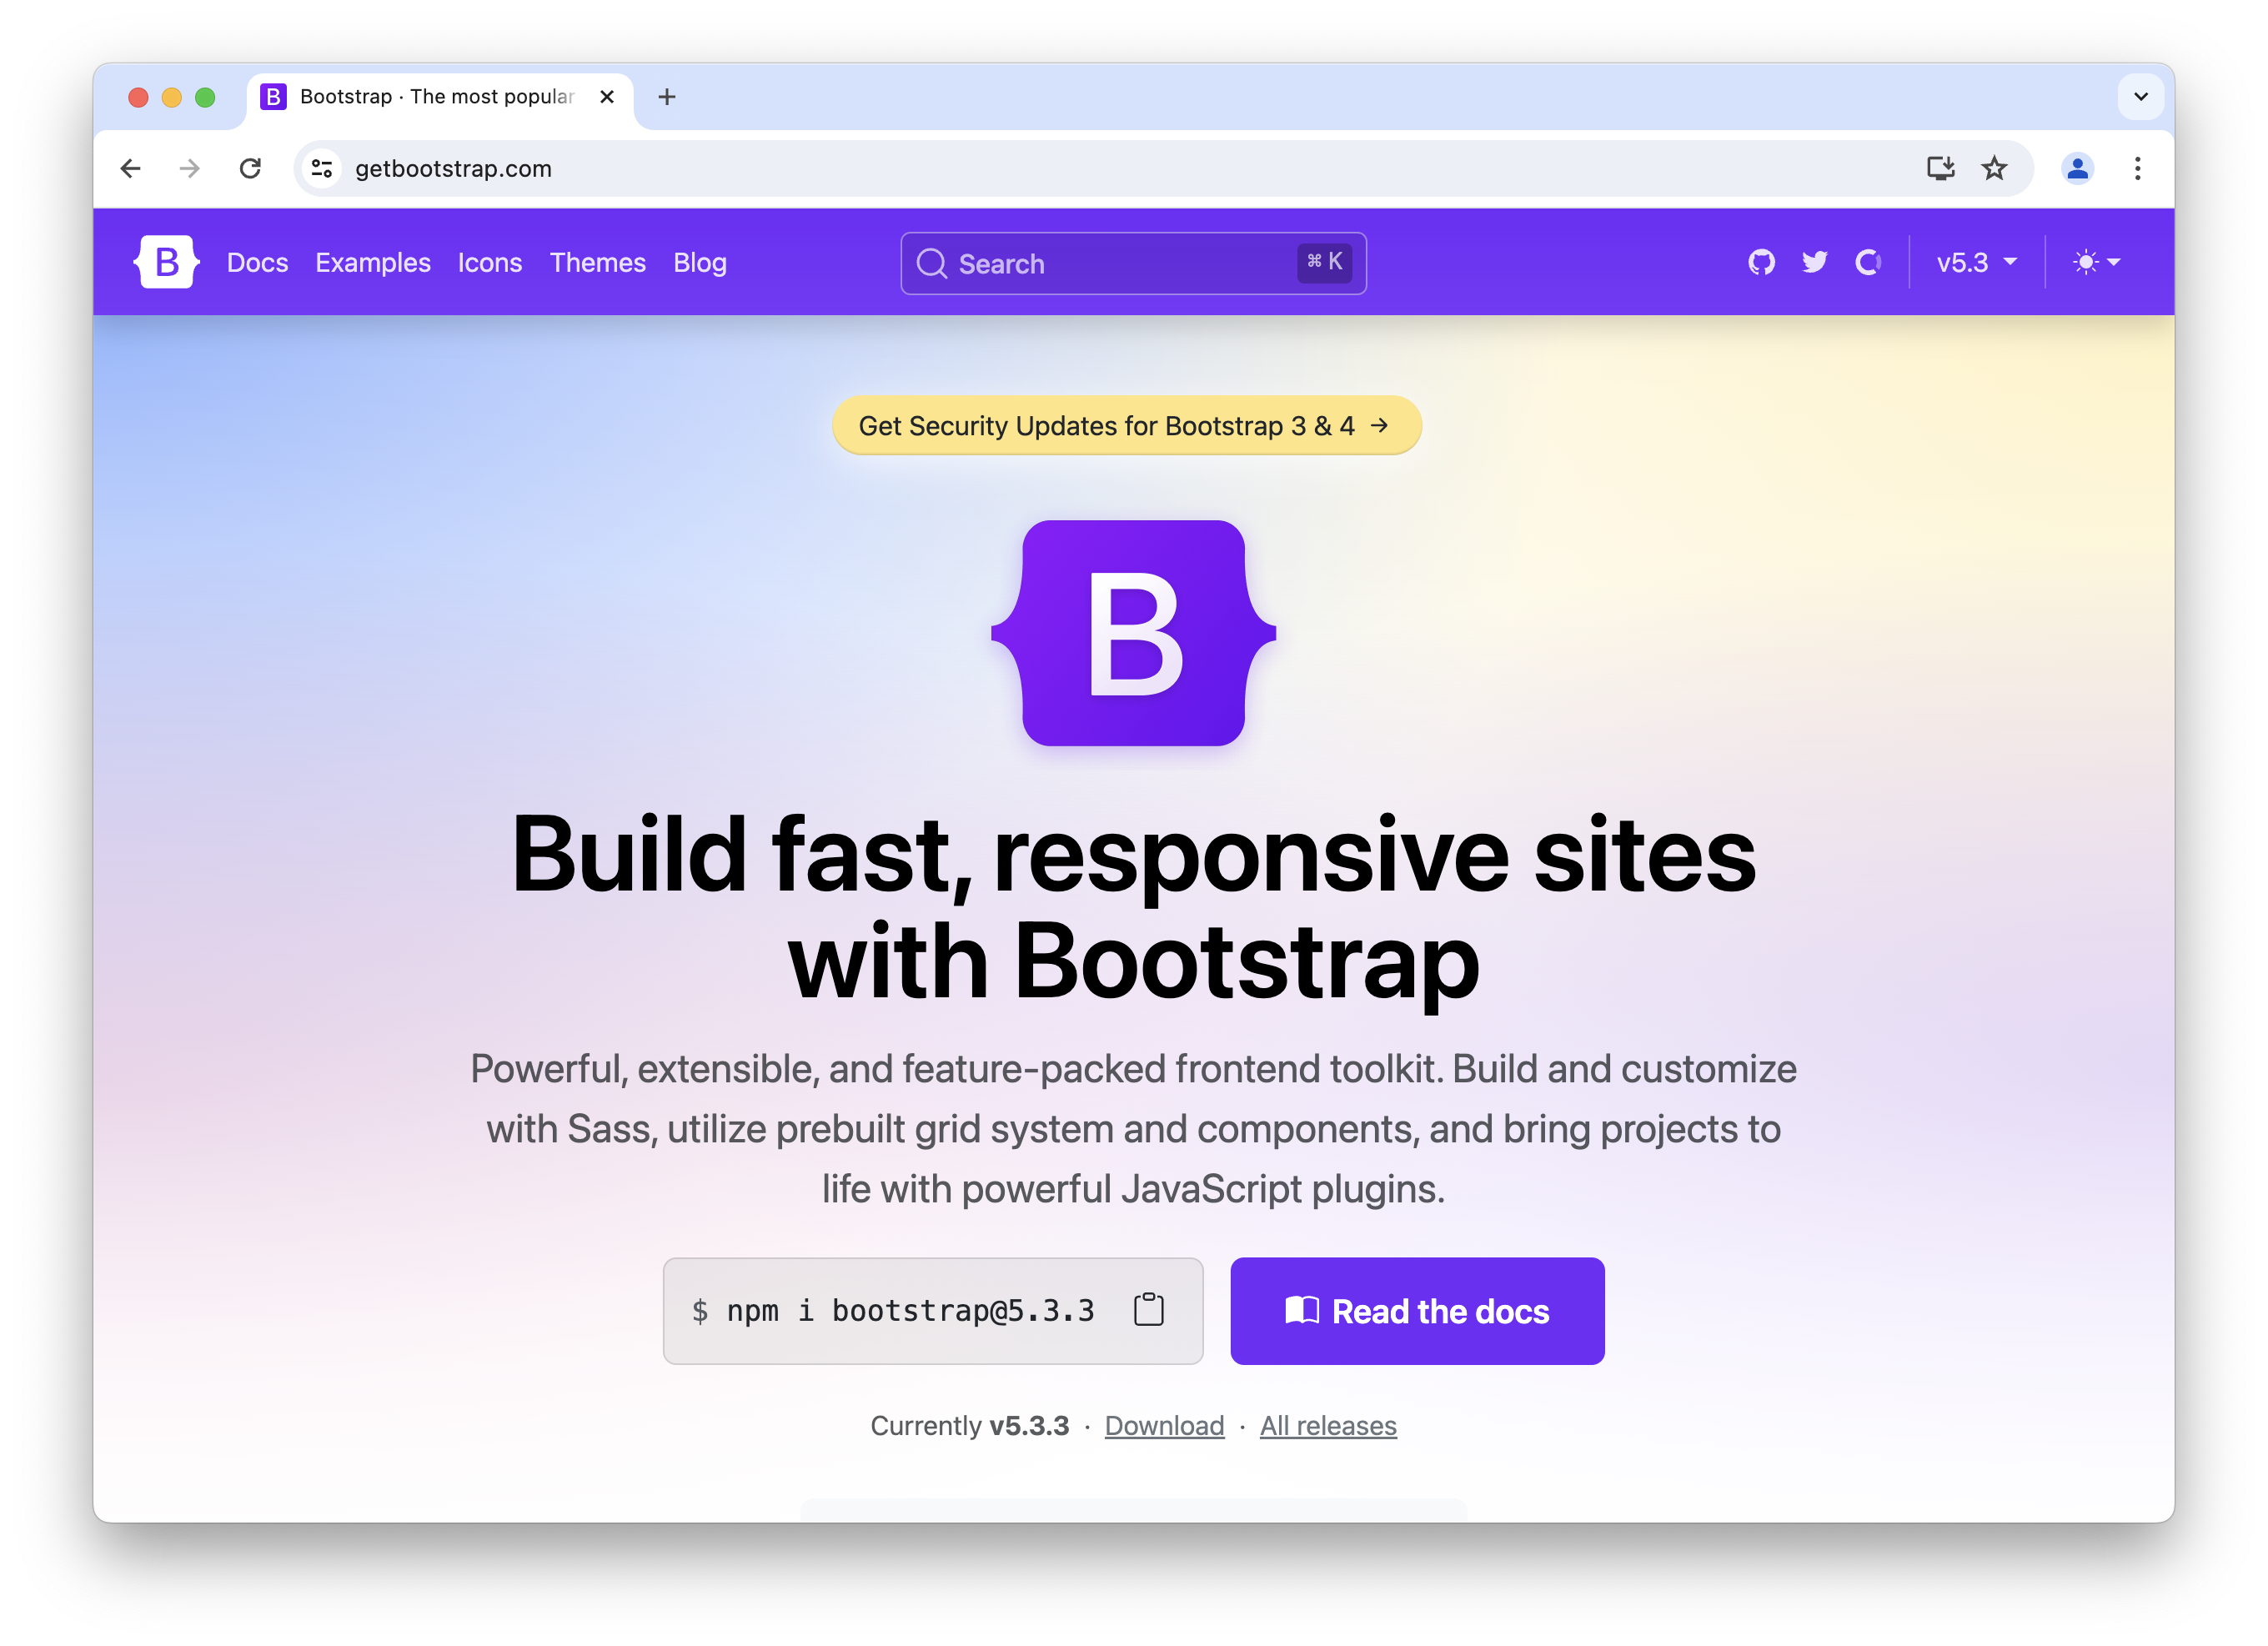 Bootstrap website